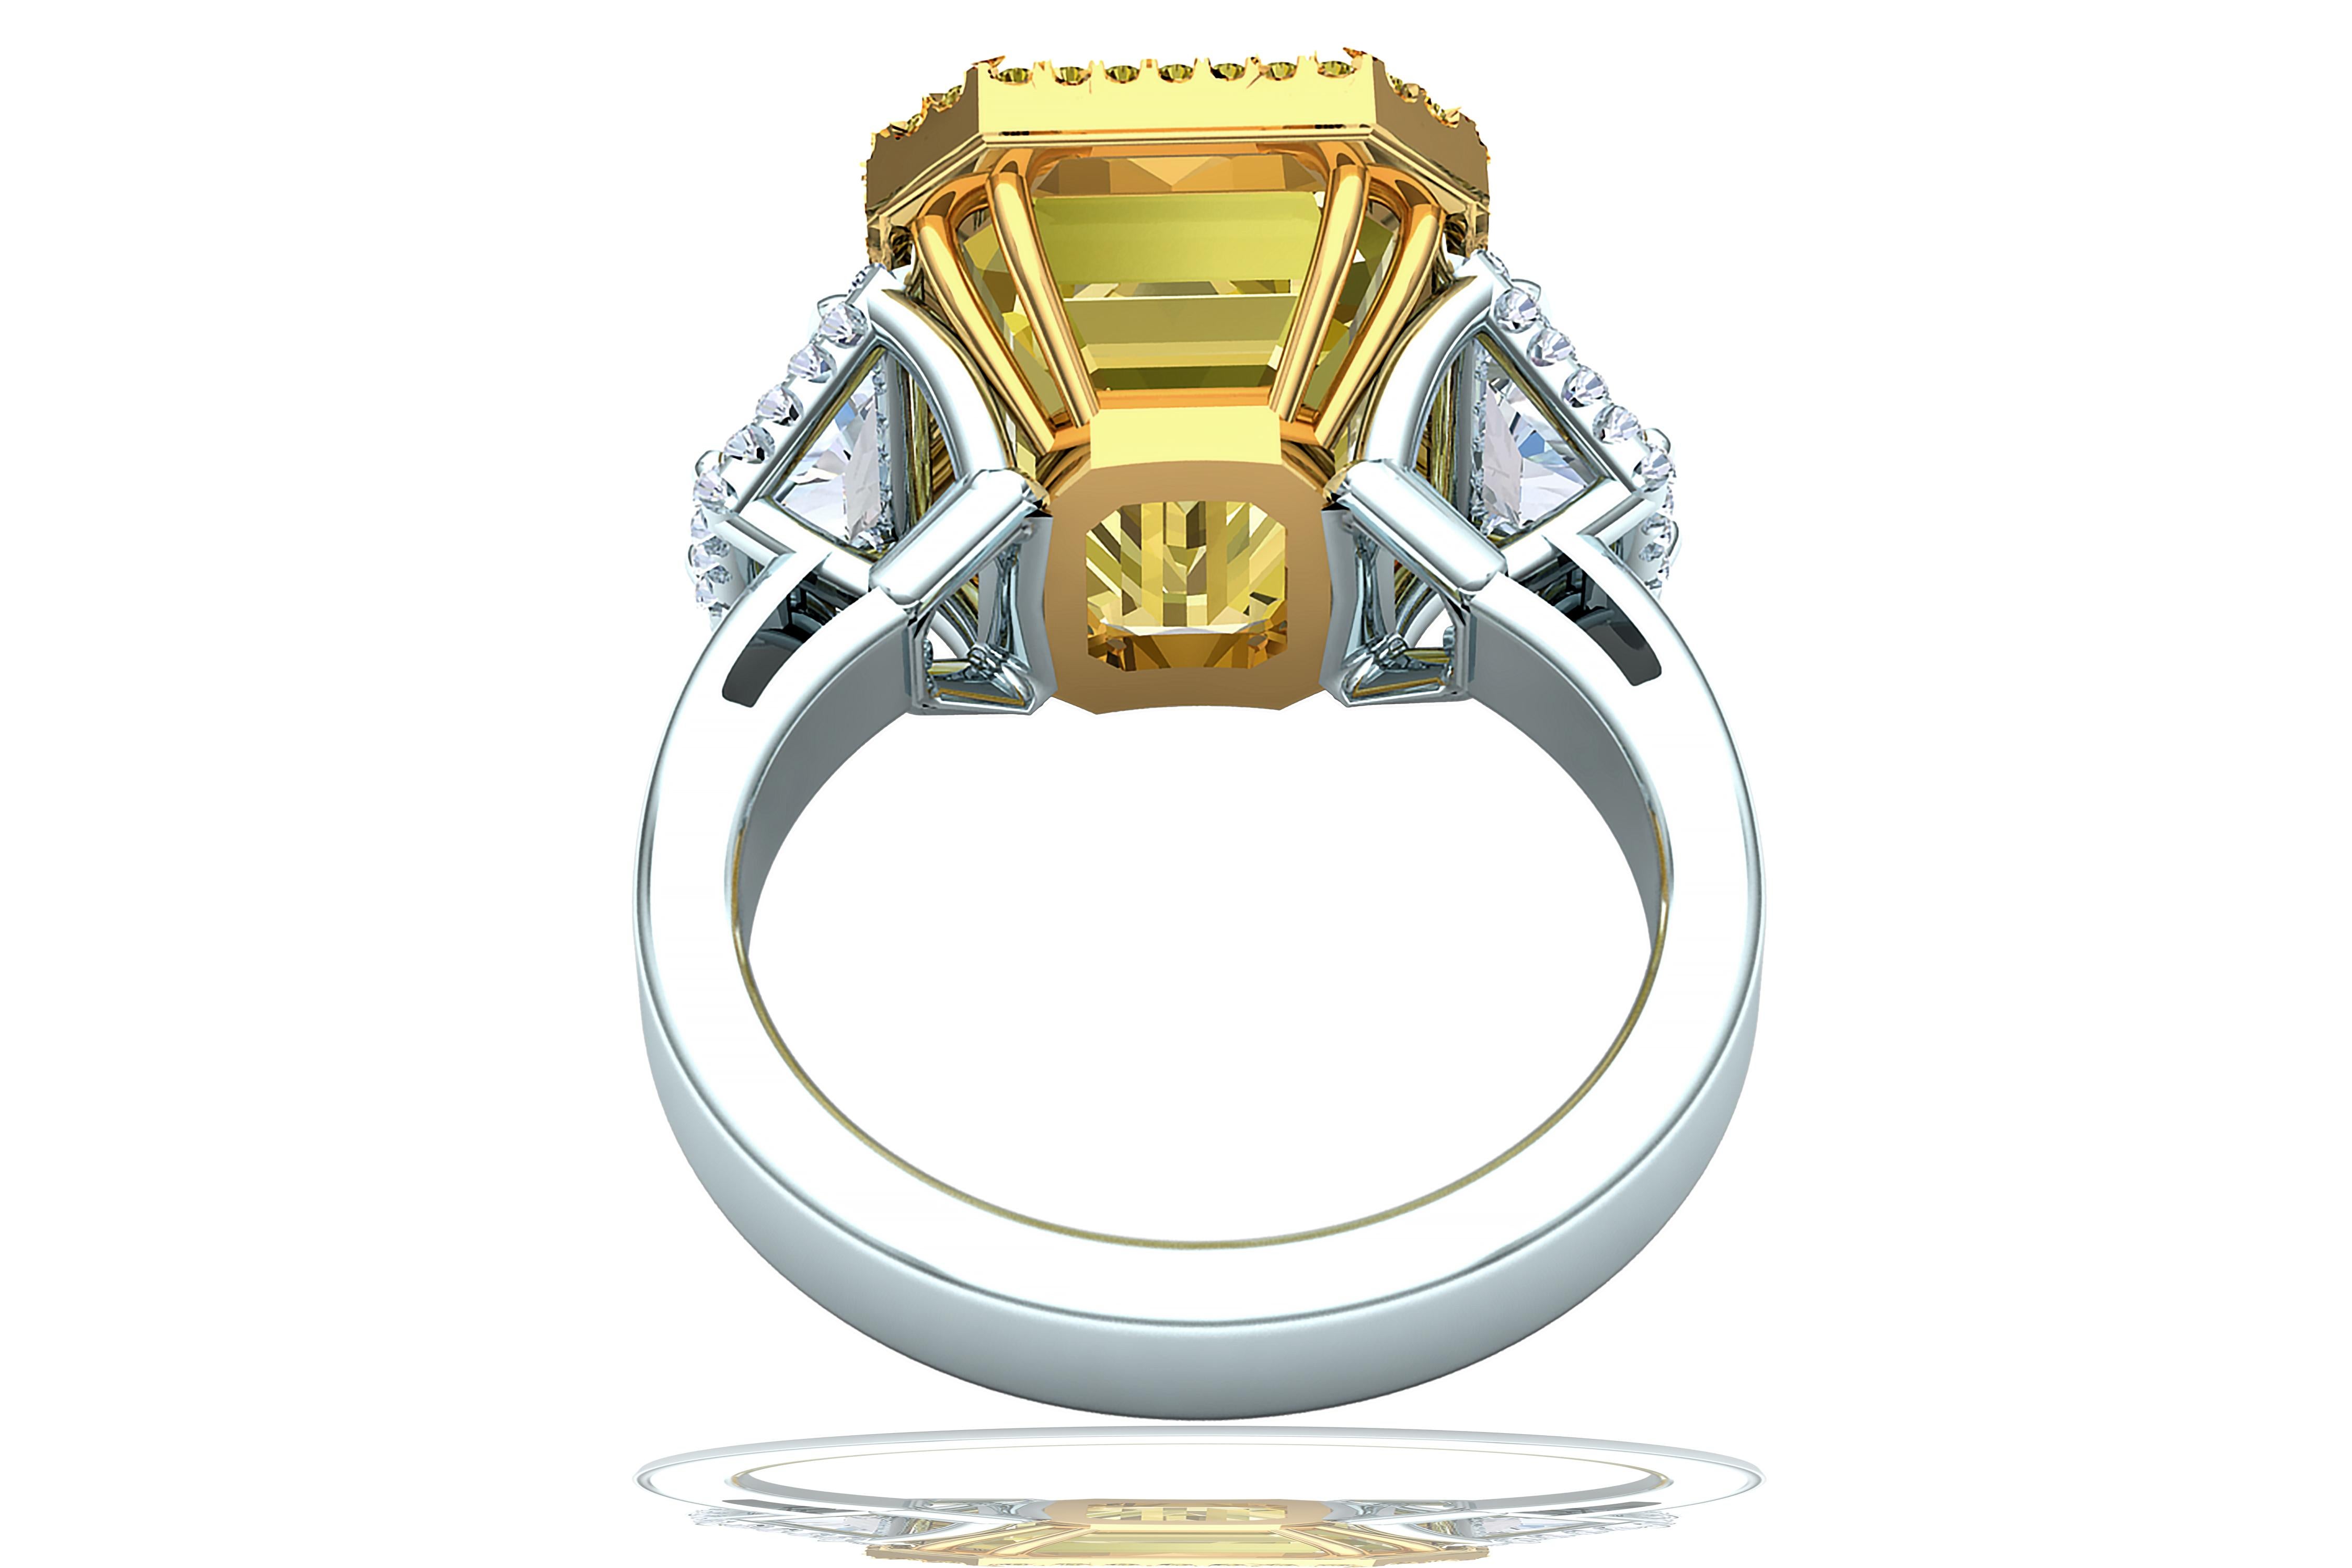 12 carat sapphire engagement ring